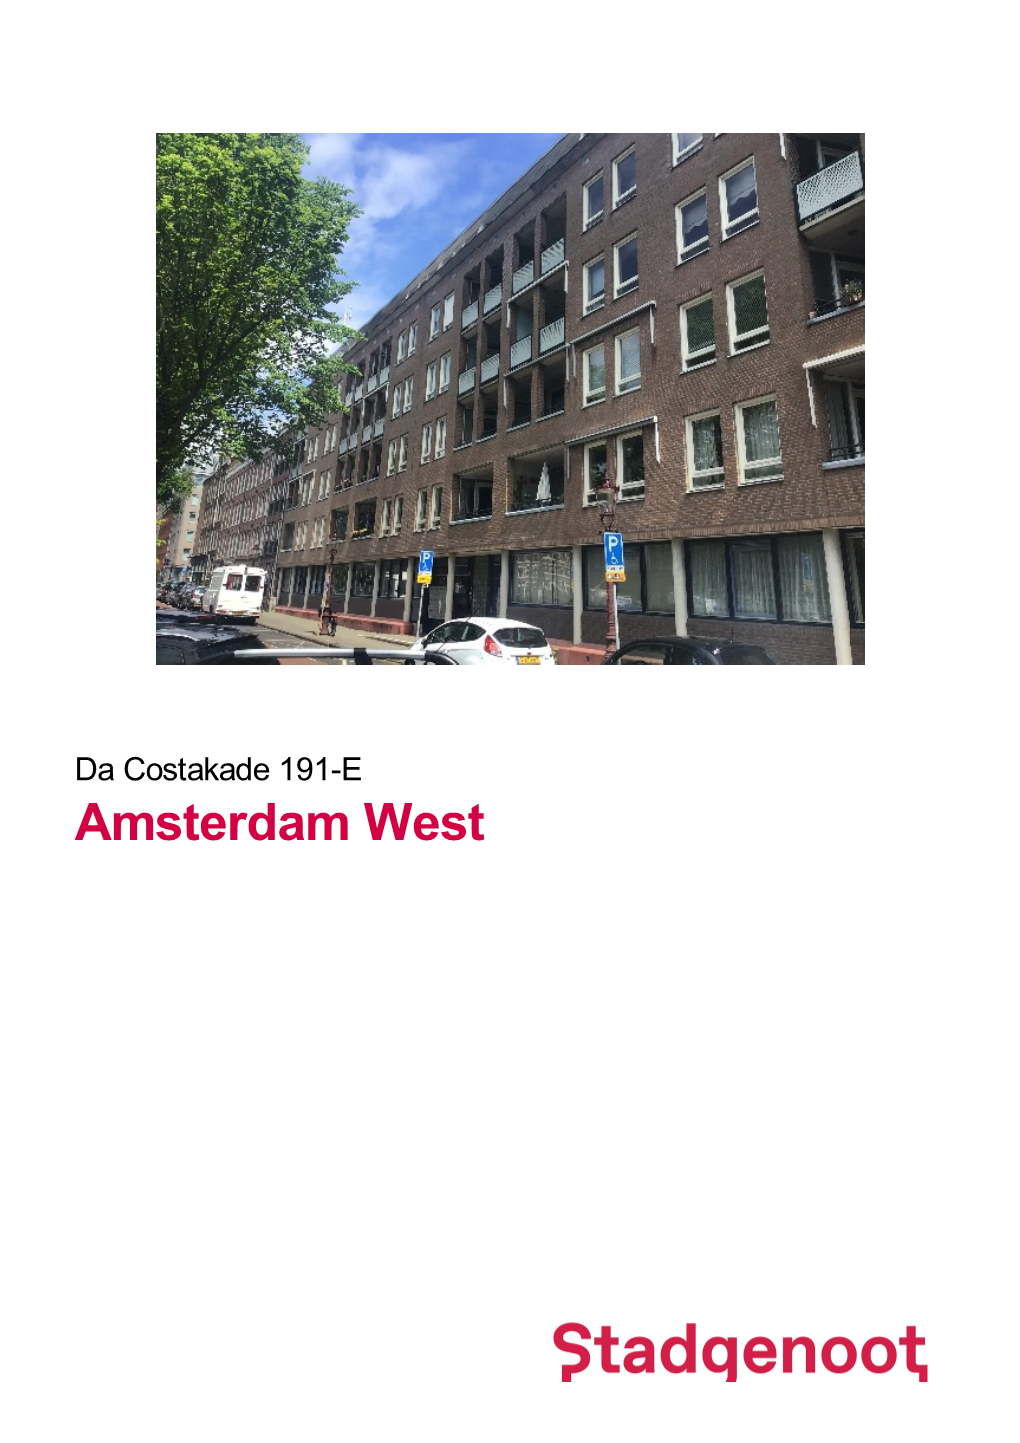 Da Costakade 191-E Amsterdam West in Deze Brochure